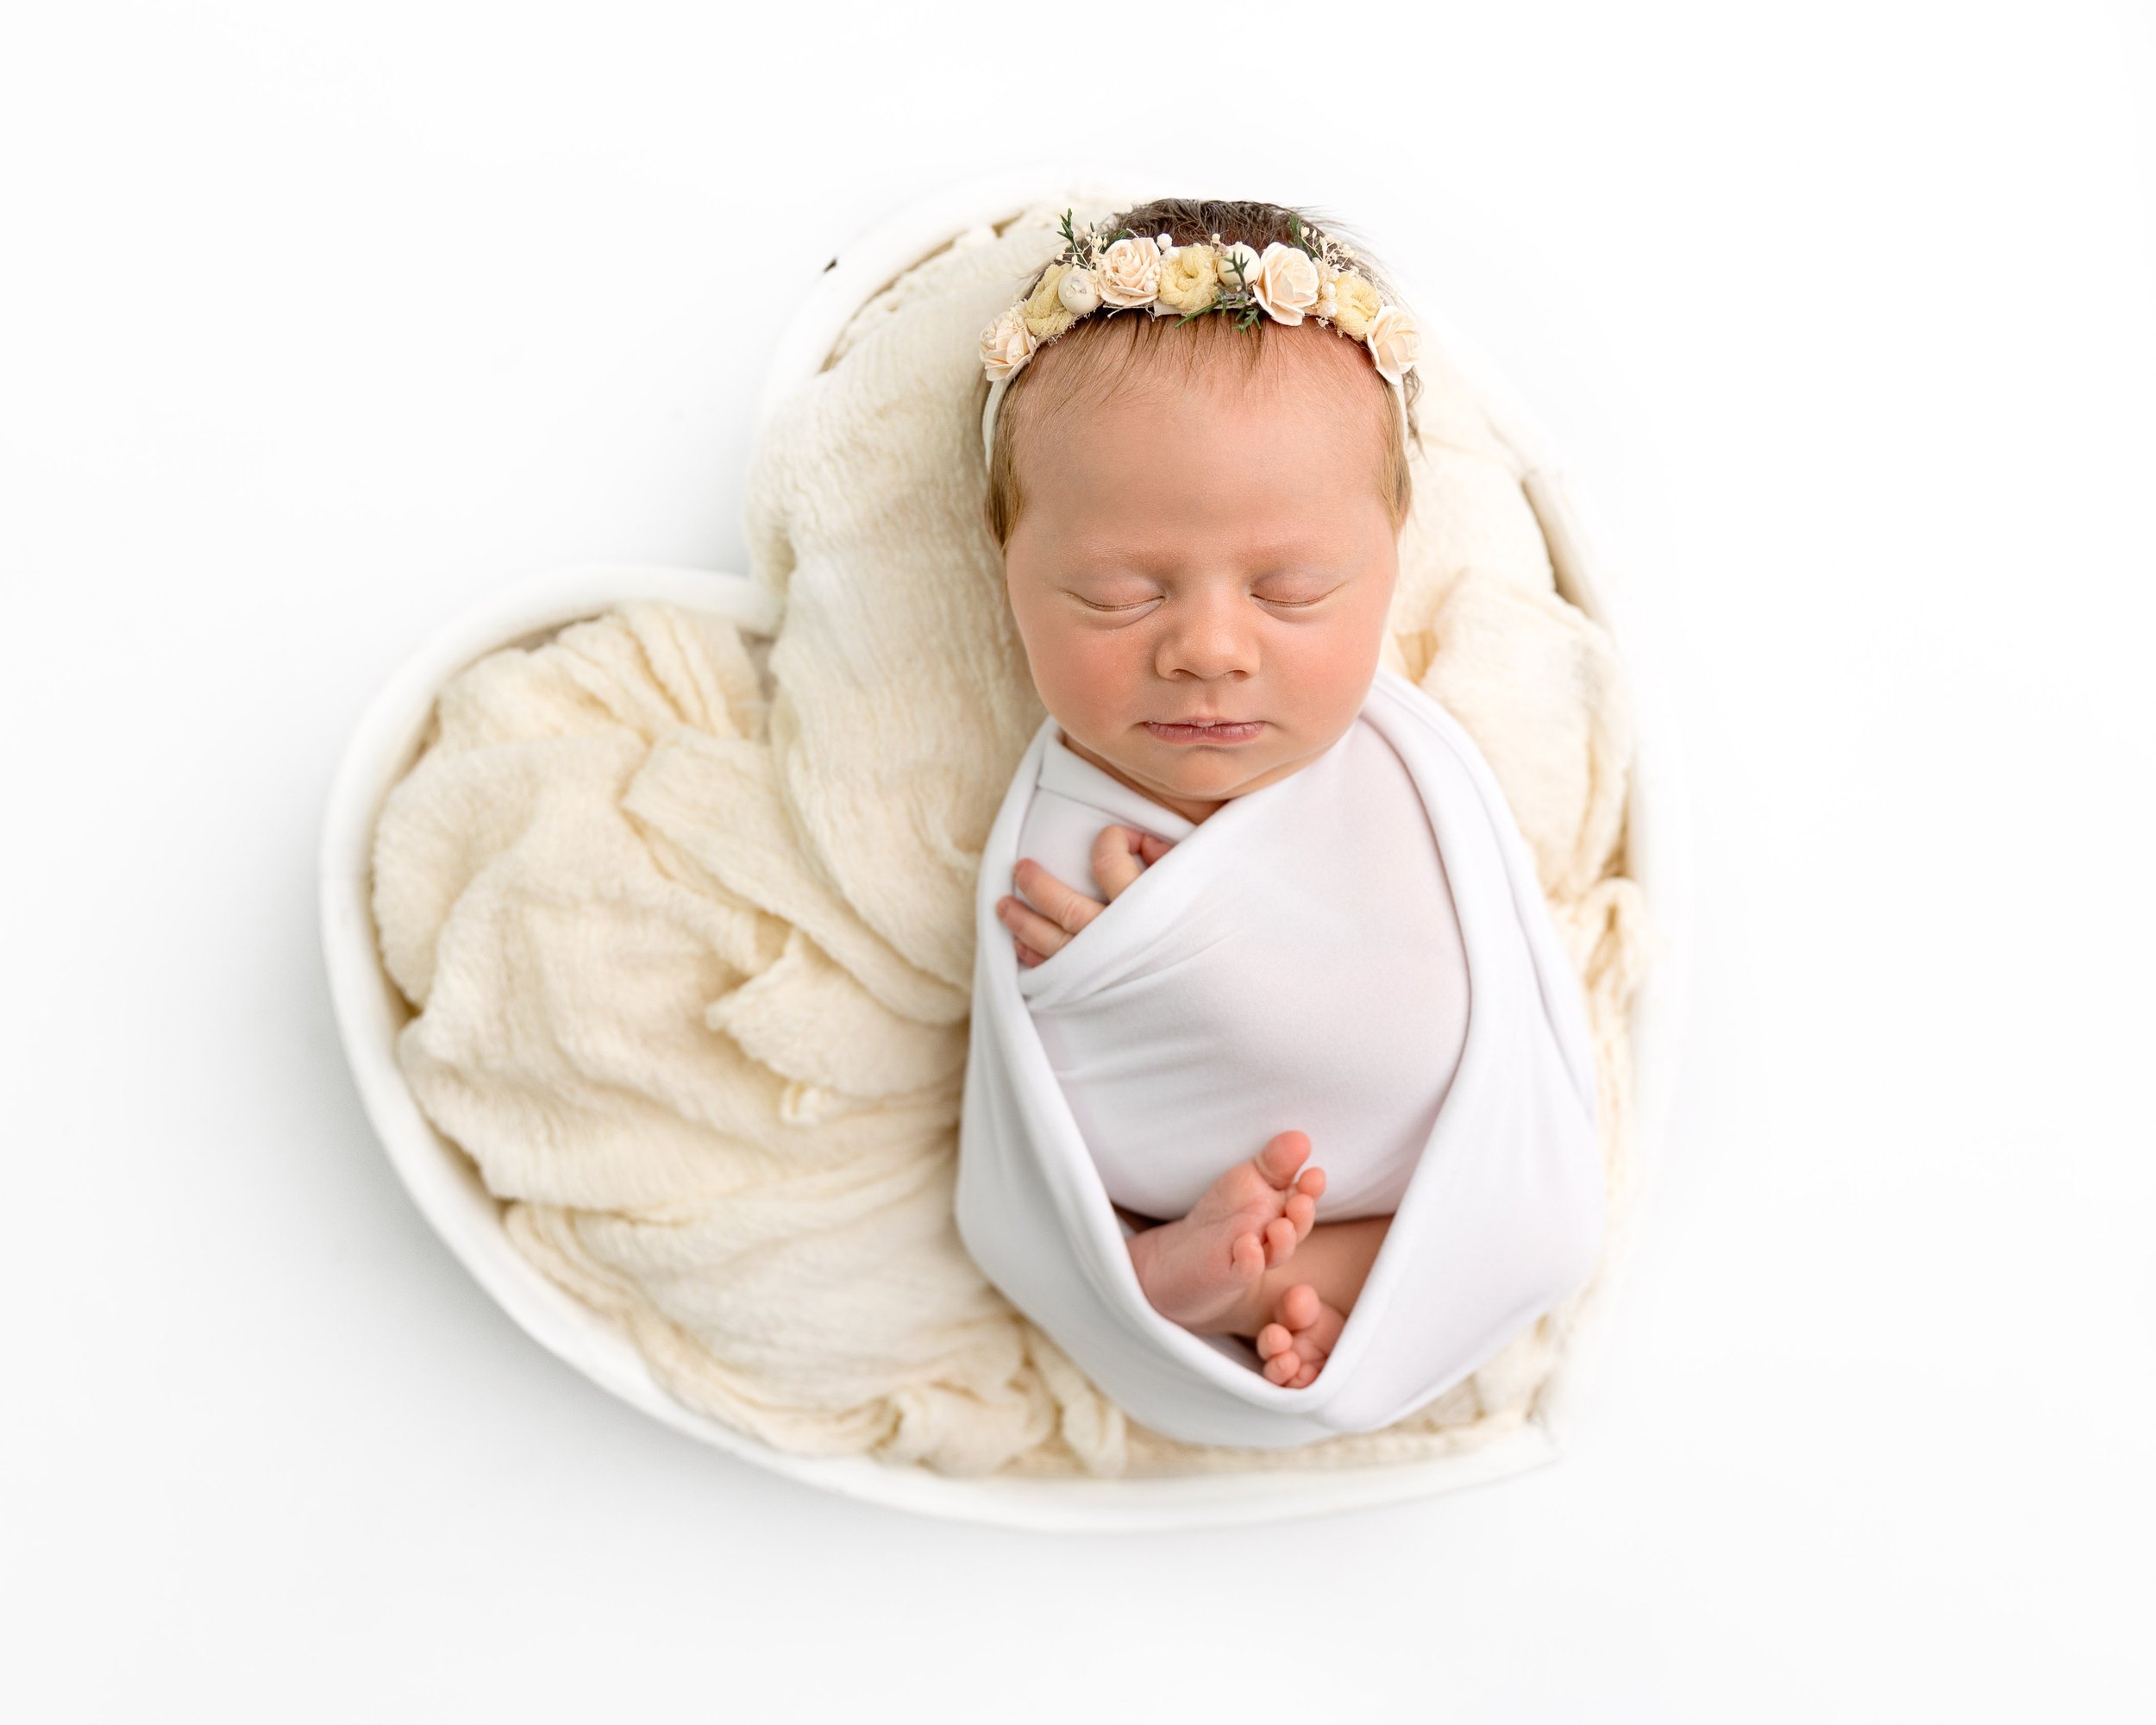 Newborn-photography-baby-images-family-photos-spokane-washington-5.jpg